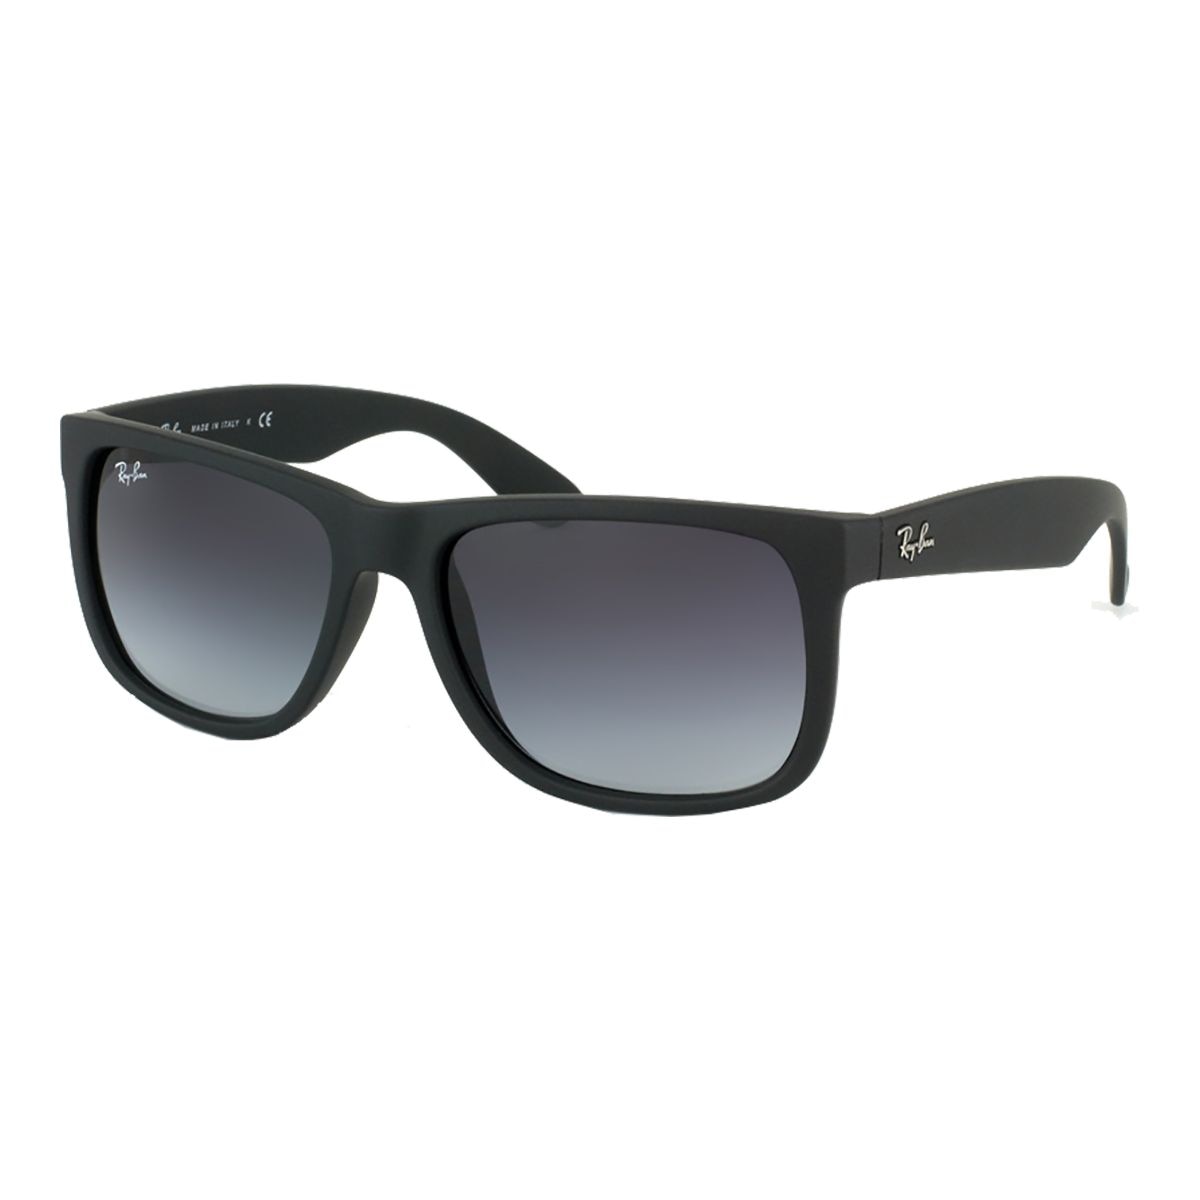 Image of Ray Ban Men's/Women's Justin Wayfarer Sunglasses Polarized